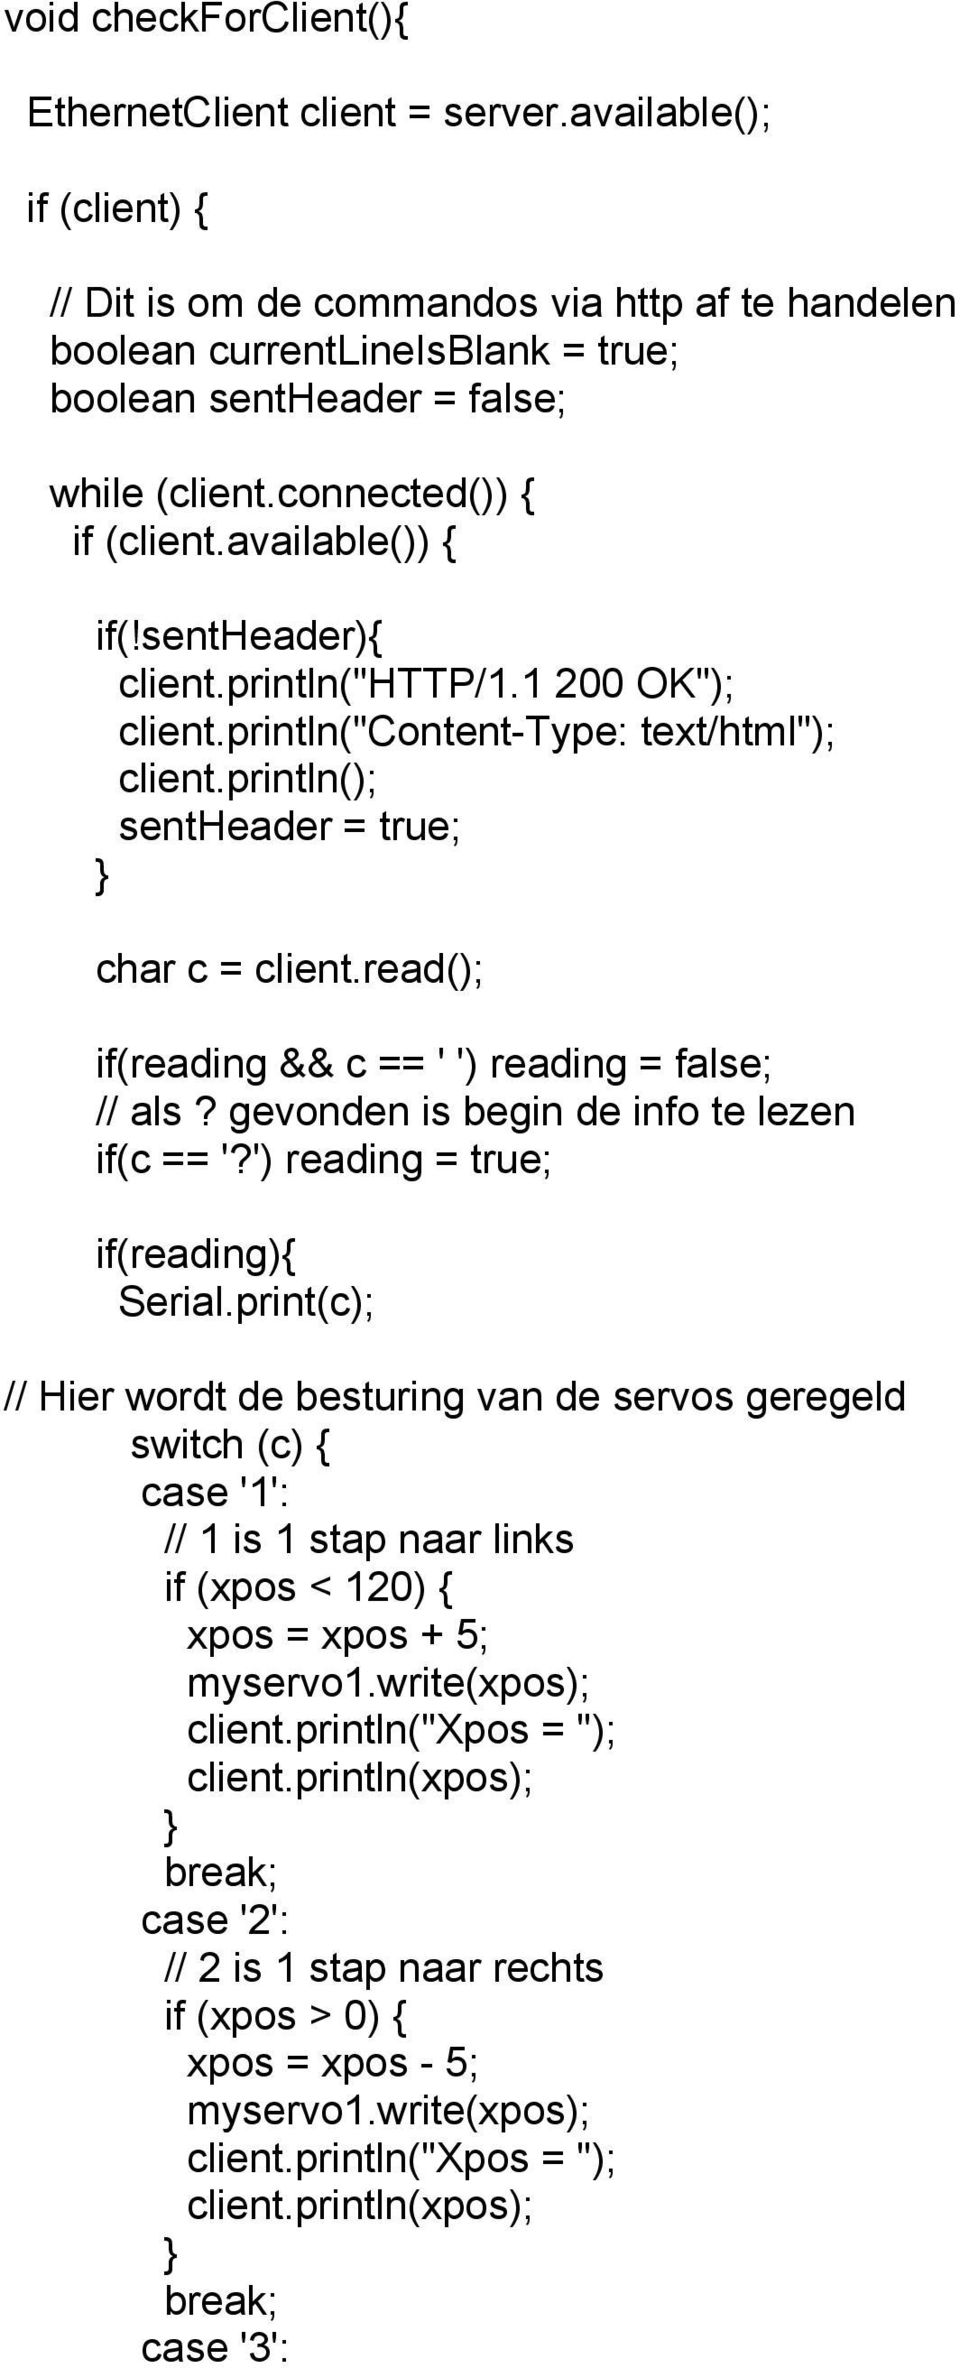 sentheader){ client.println("http/1.1 200 OK"); client.println("content-type: text/html"); client.println(); sentheader = true; char c = client.read(); if(reading && c == ' ') reading = false; // als?